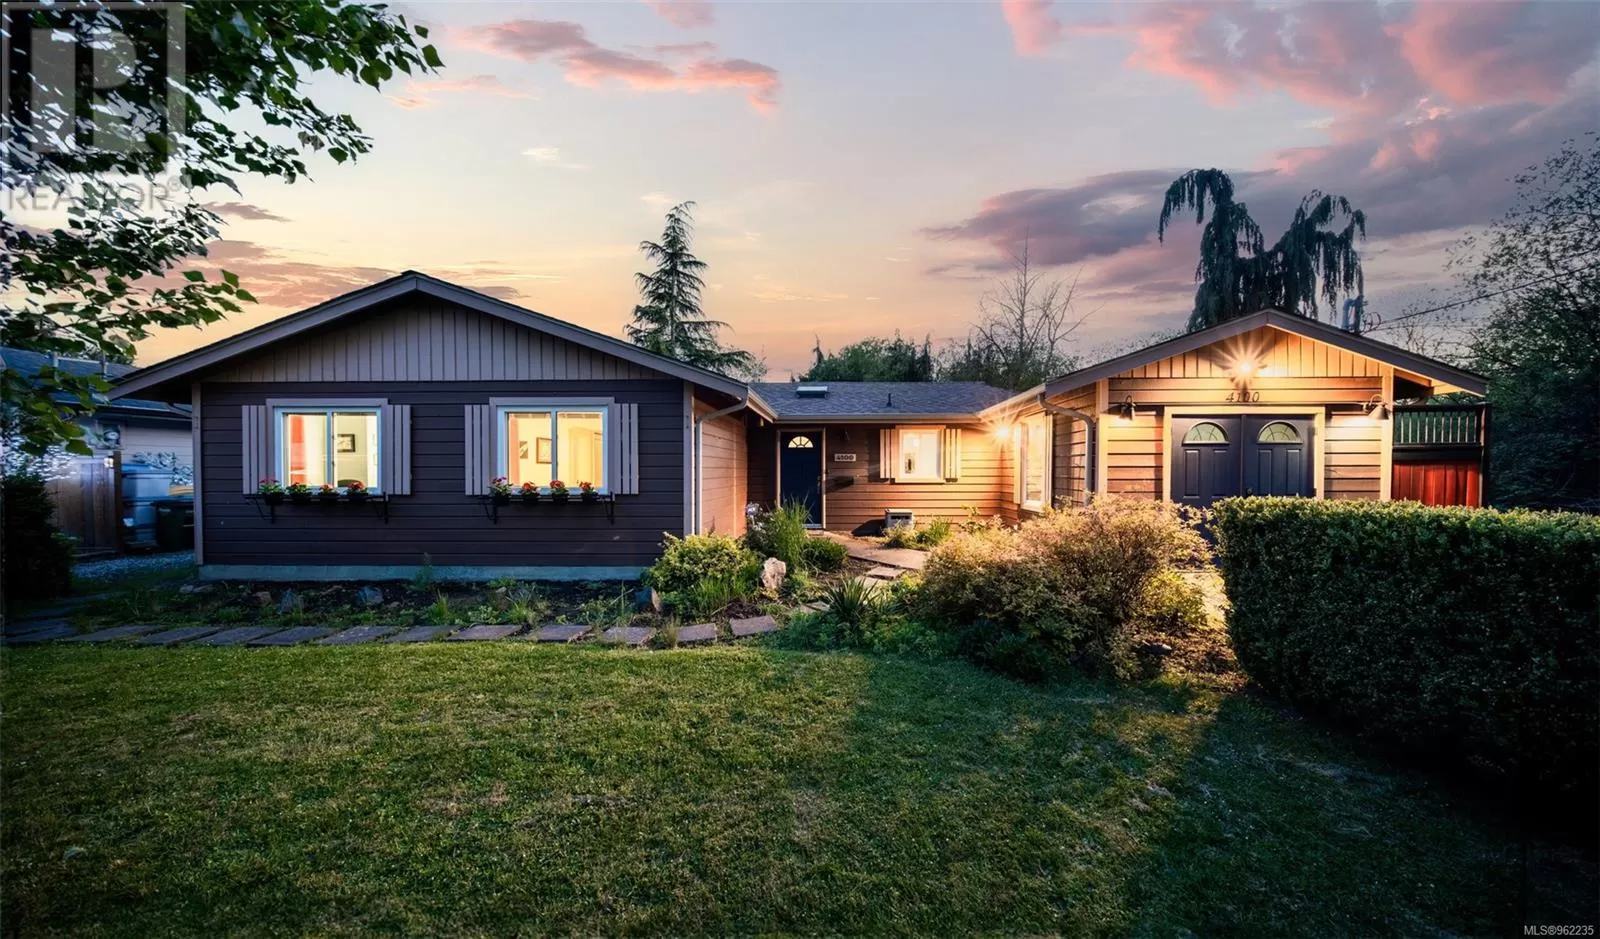 House for rent: 4100 Interurban Rd, Saanich, British Columbia V8Z 4W7